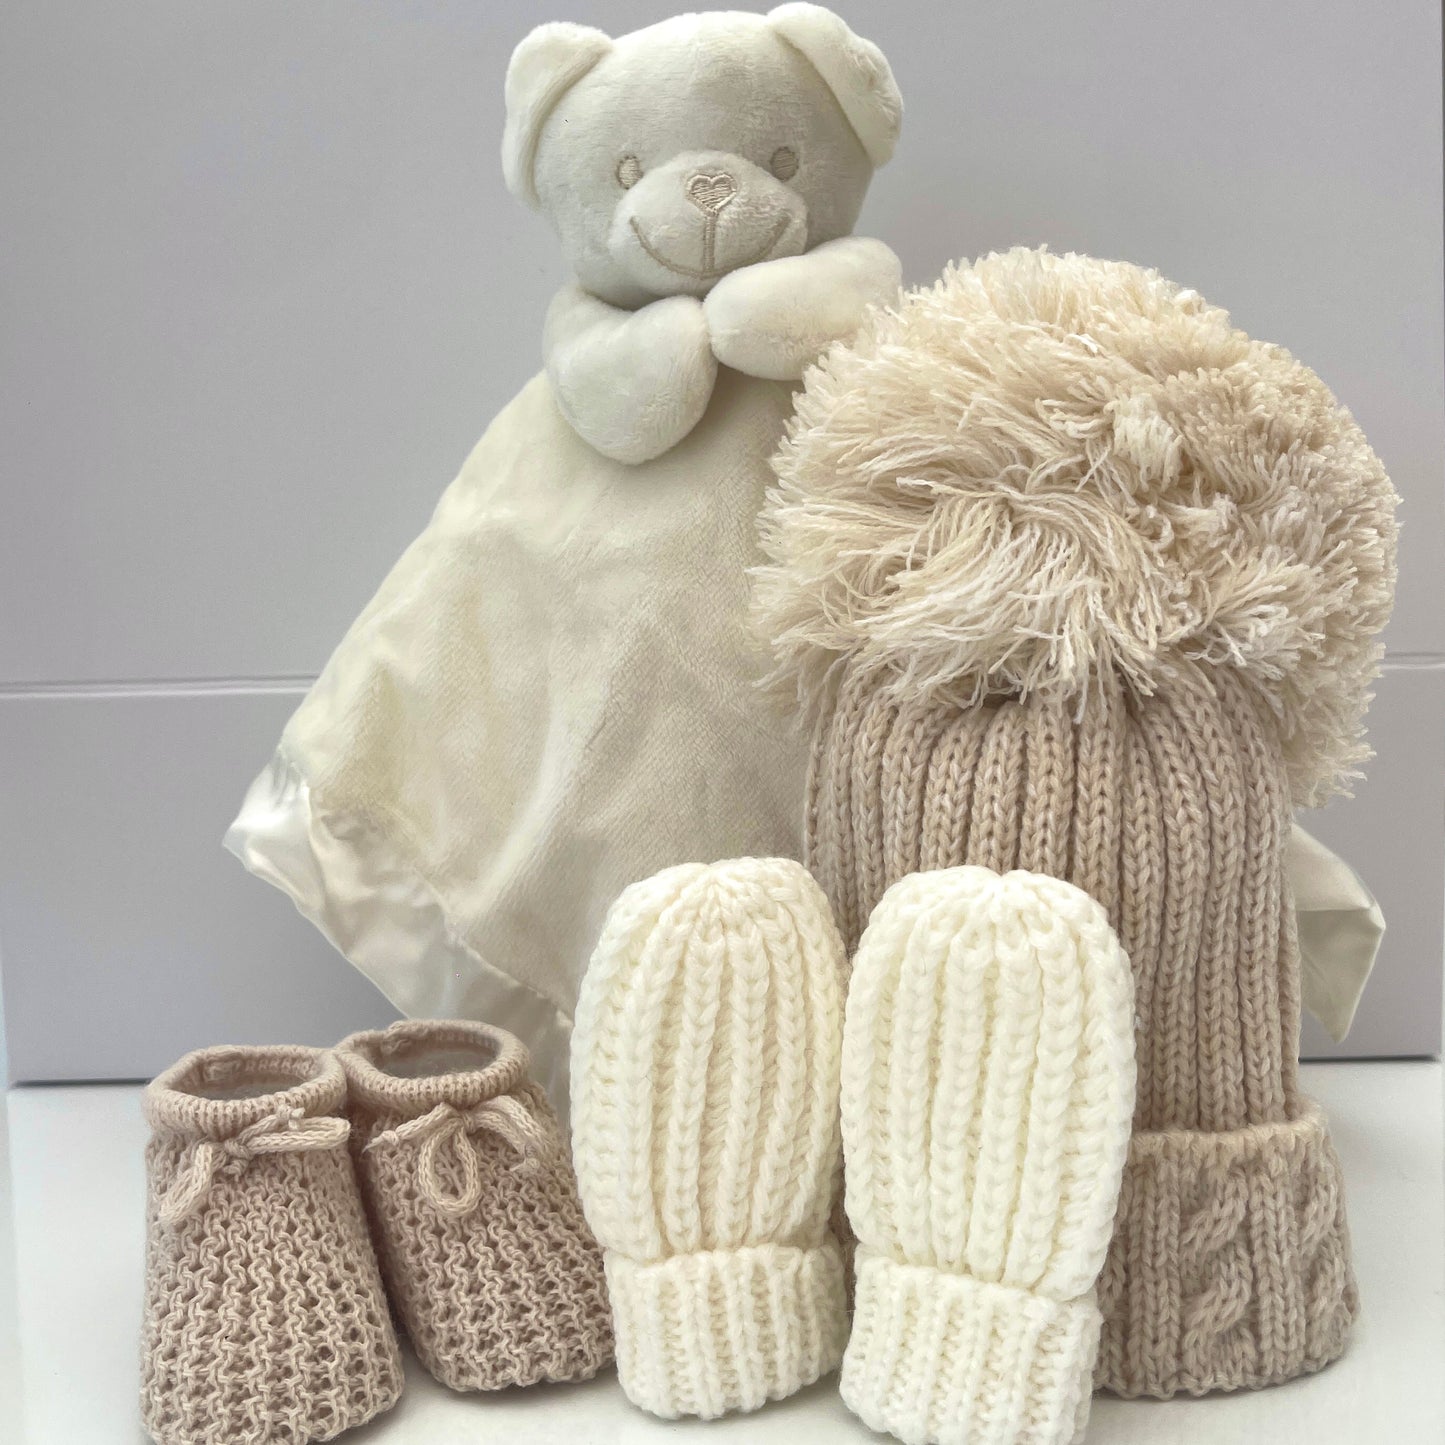 OAKLEY - Cream bear comforter and cosy gift box